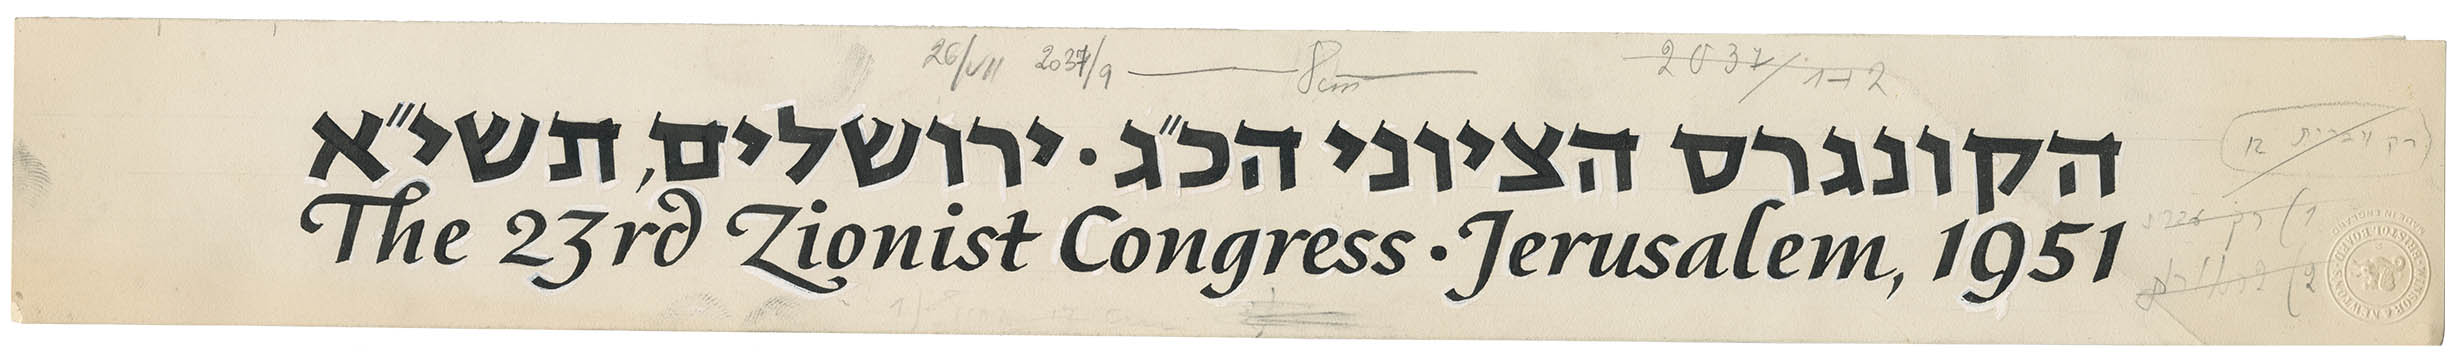 The 23rd Zionist Congress